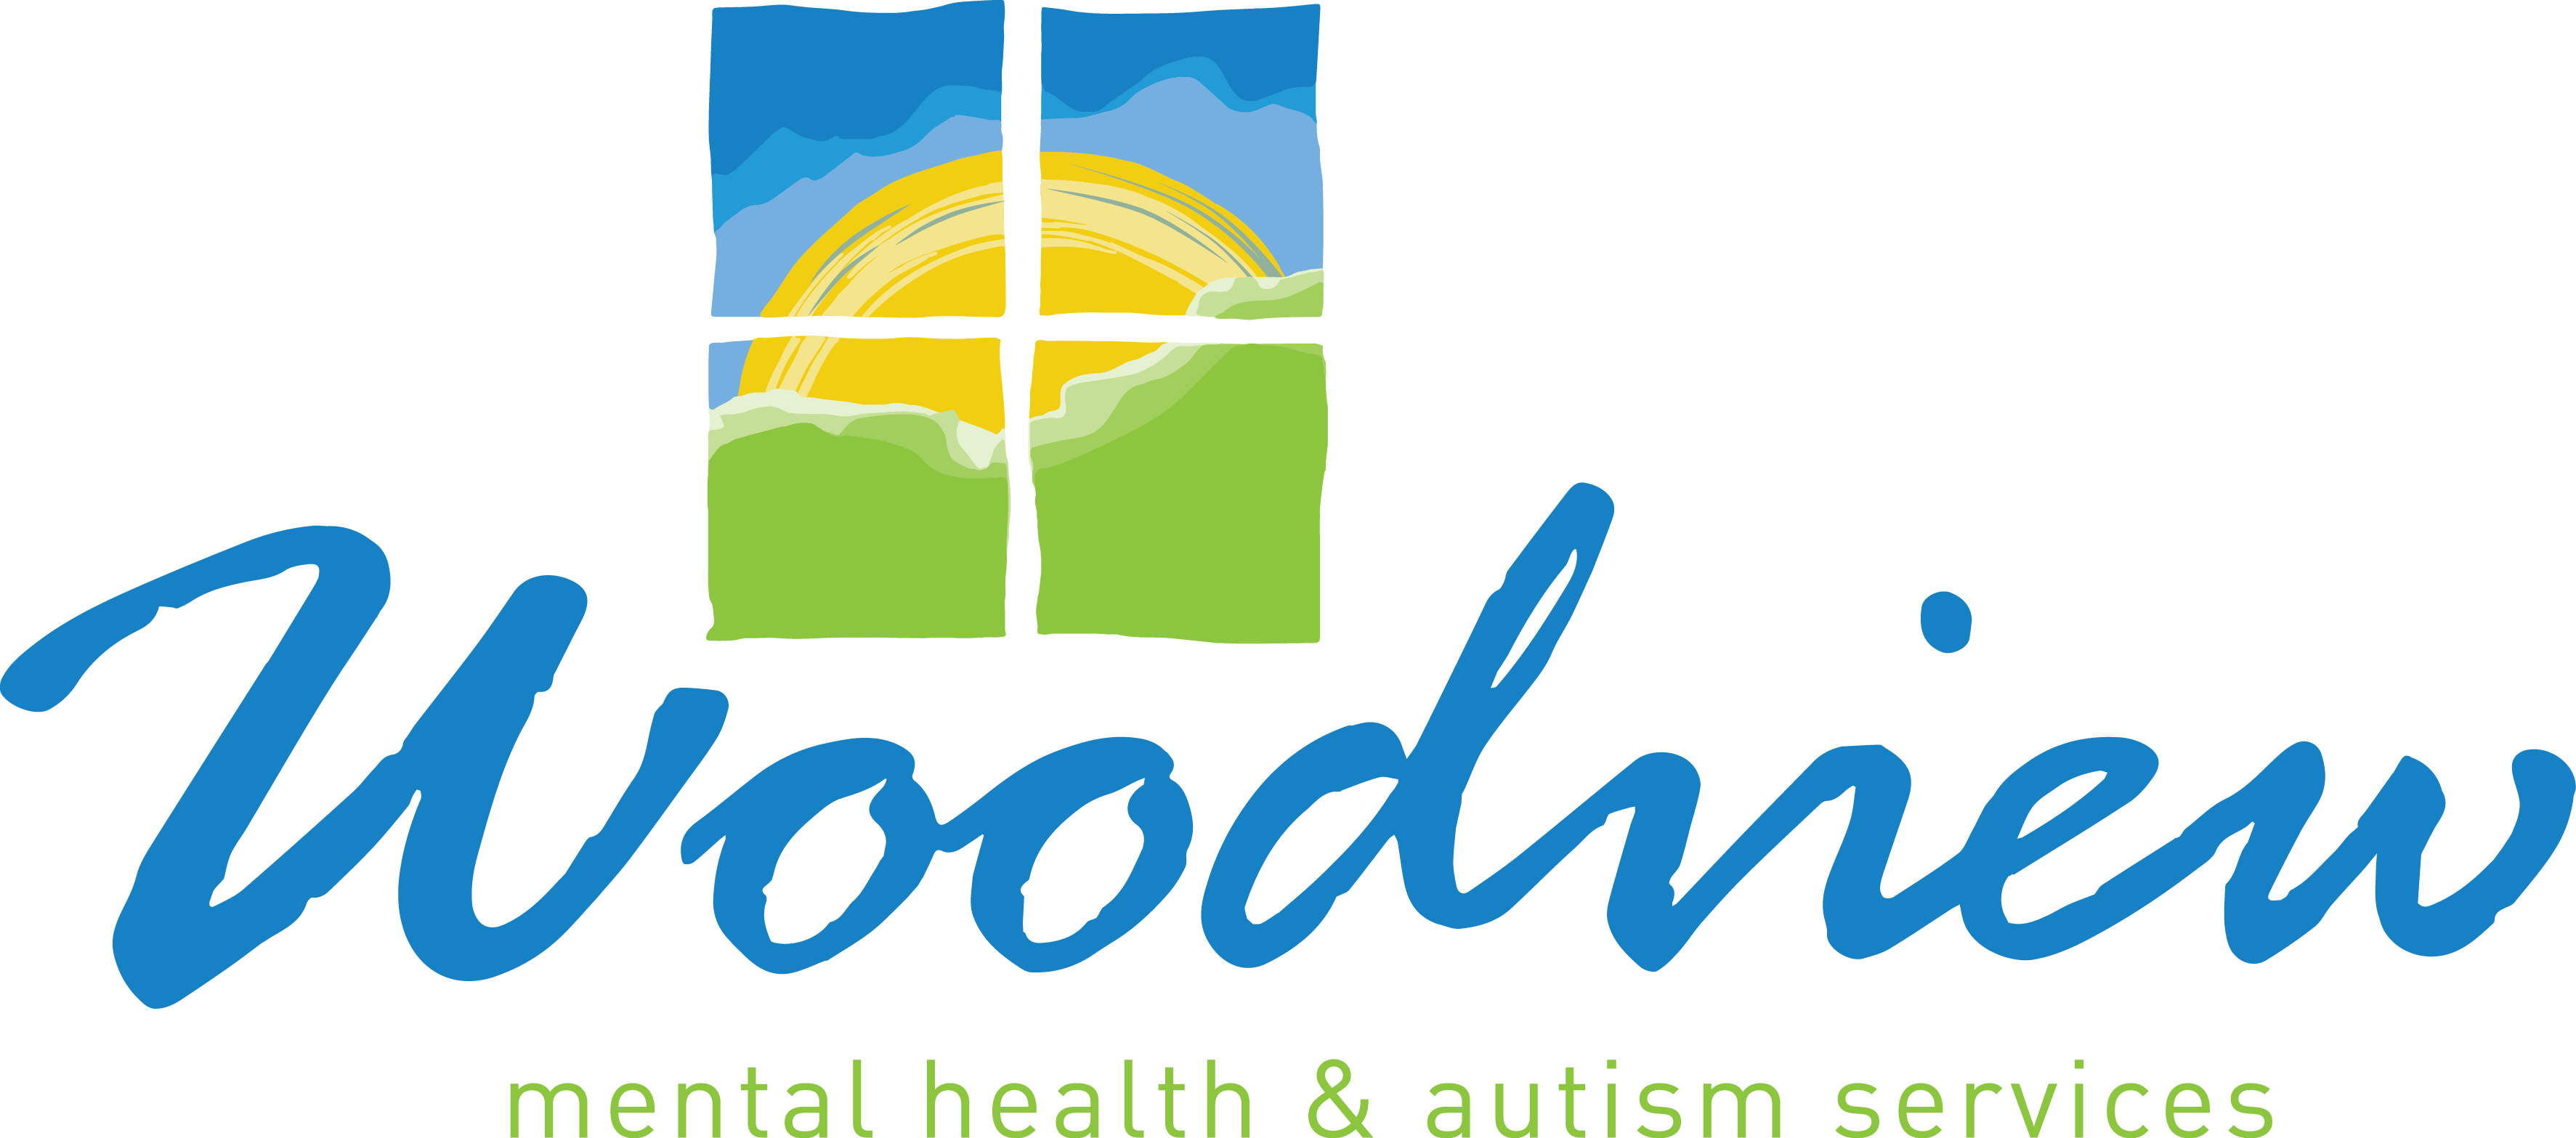 Woodview Mental Health & Autism Services